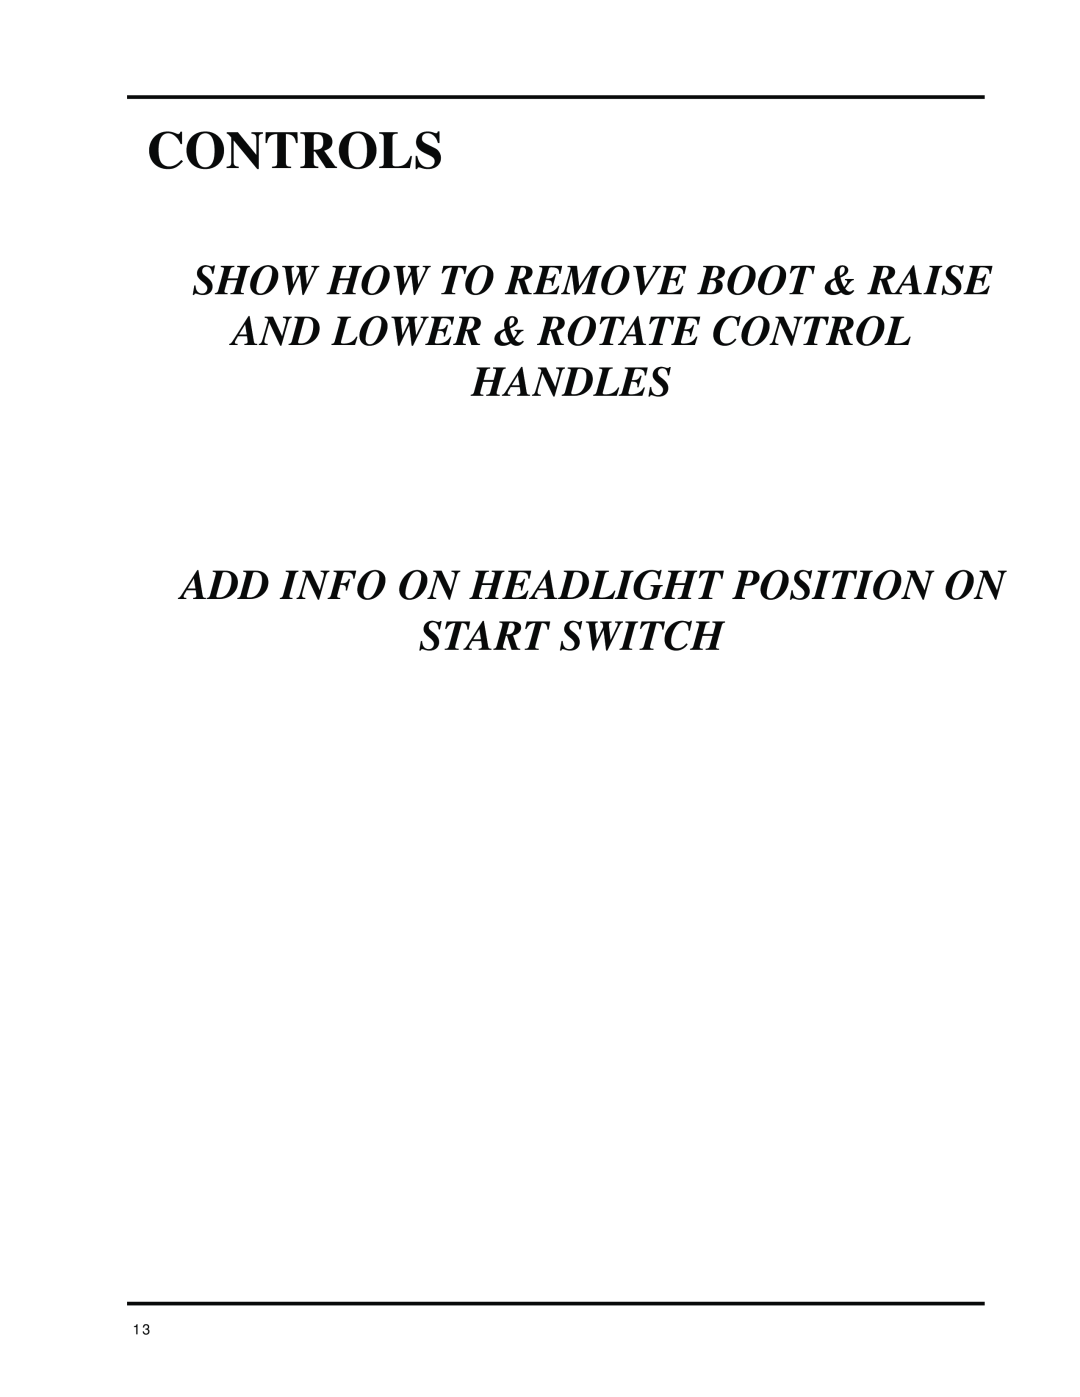 Dixon ZTR 8025 manual Controls, Handles, Add Info On Headlight Position On Start Switch 